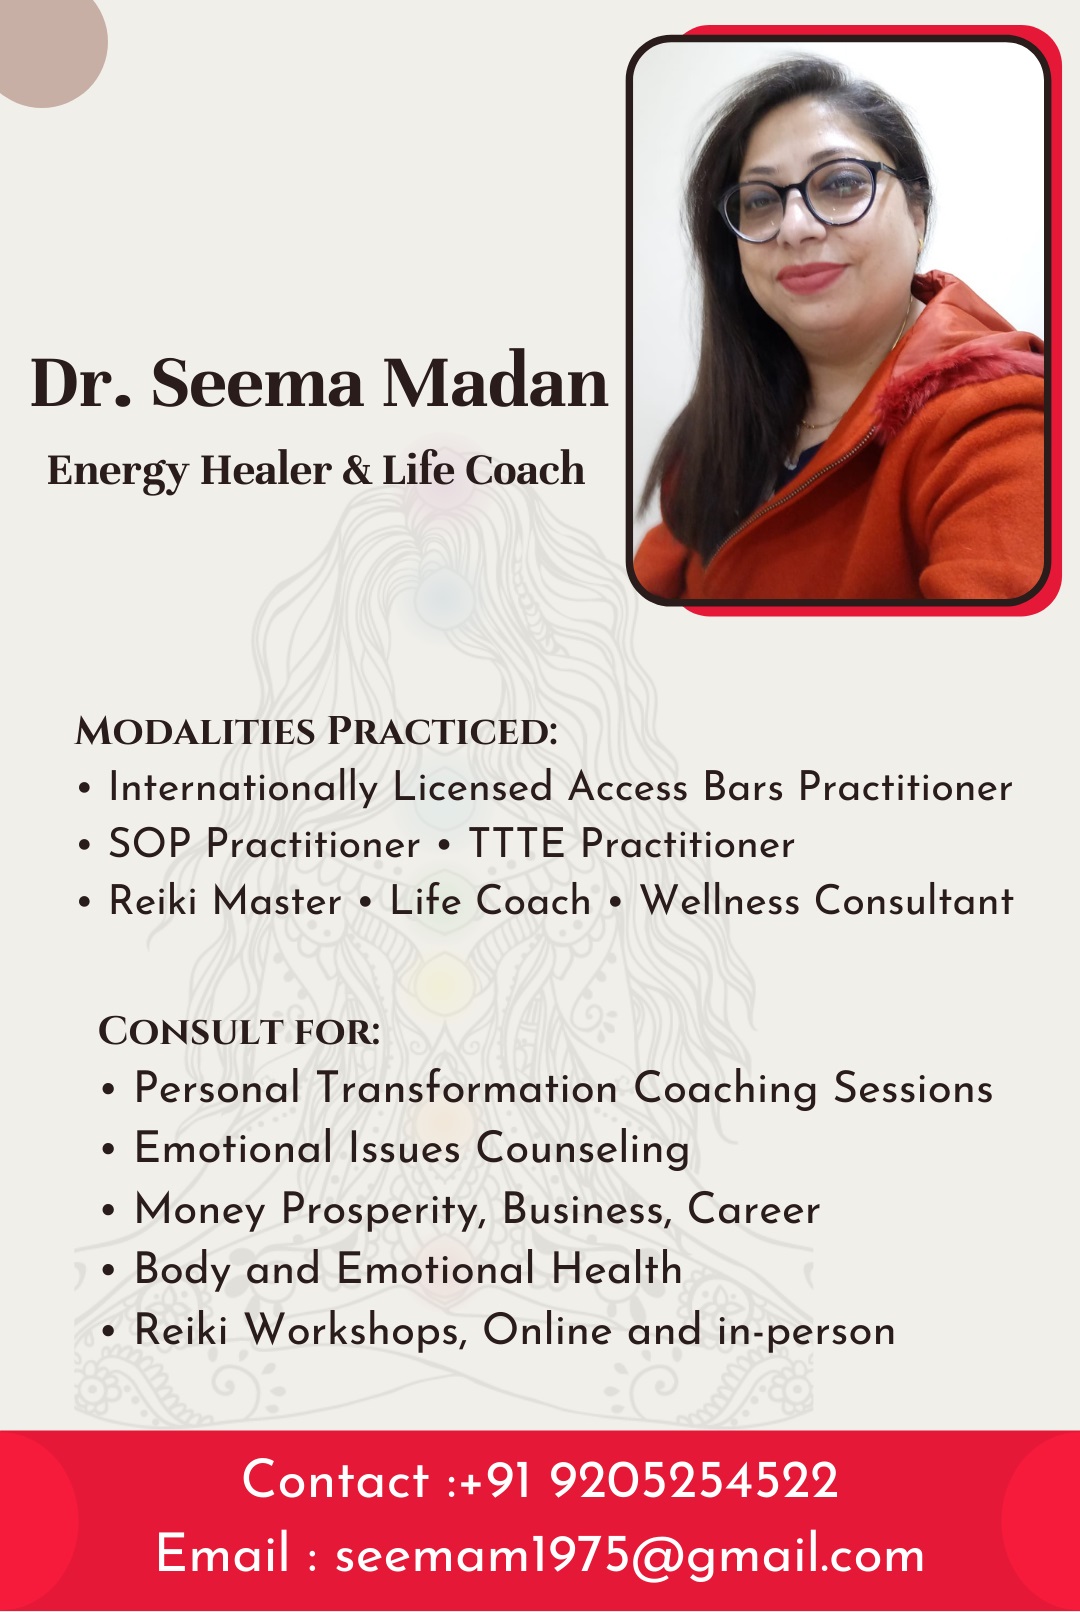 Dr. Seema Madan - Energy Healer & Life Coach - Thane